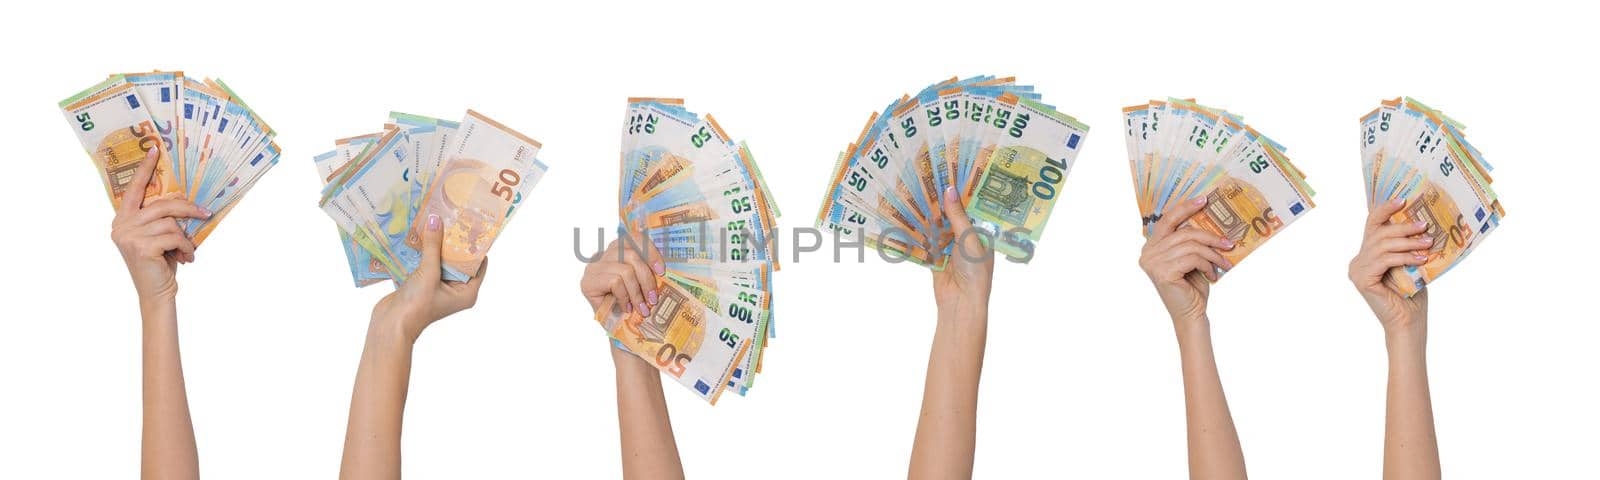 Hands holding euro cash money banknotes isolated on white background. by DariaKulkova